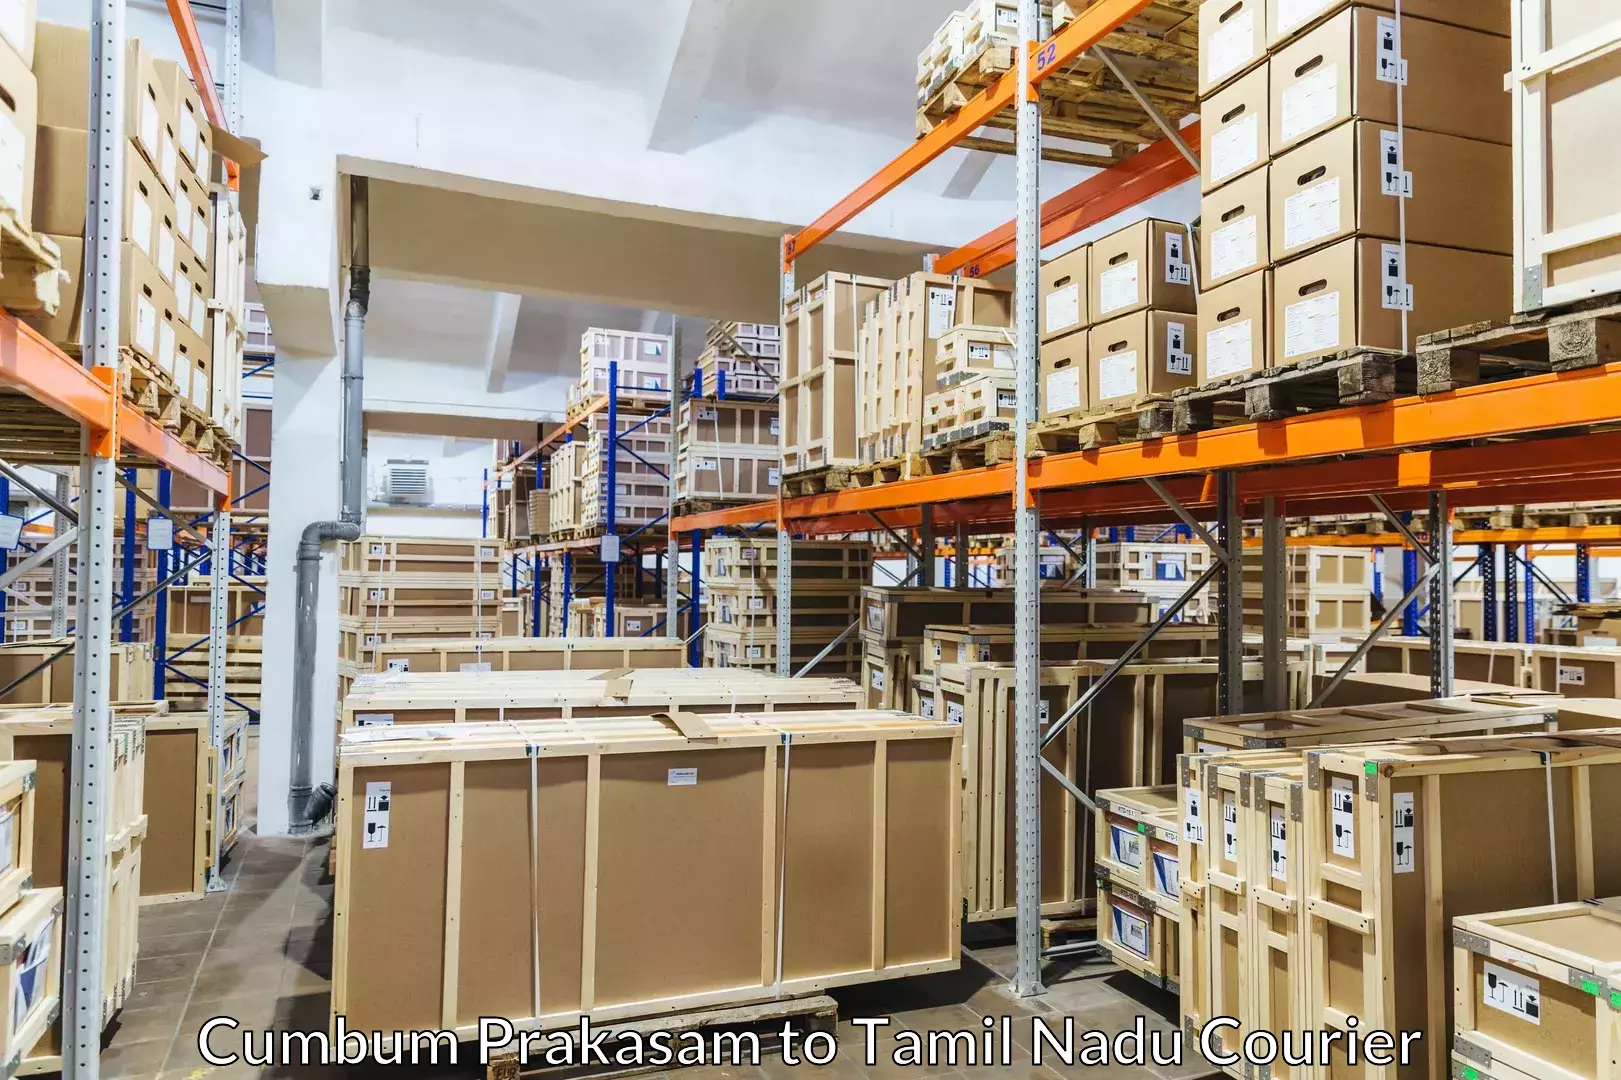 Professional movers and packers Cumbum Prakasam to Tamil Nadu